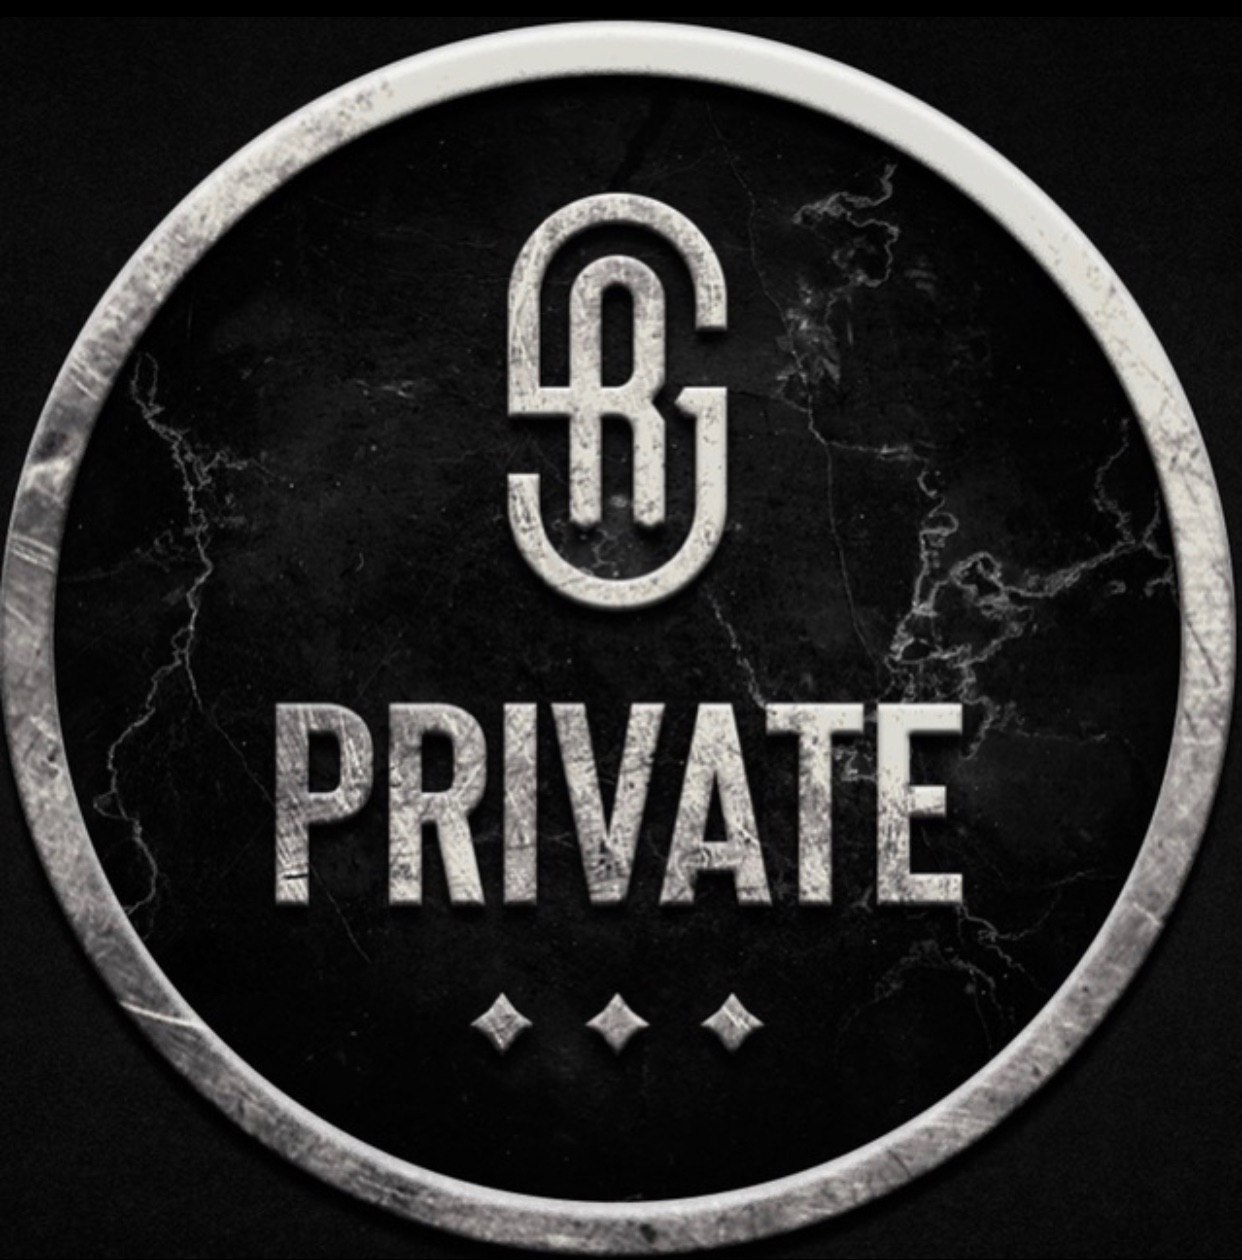 Best privat. Приват. Private логотип. Приватный канал. Приват канал.